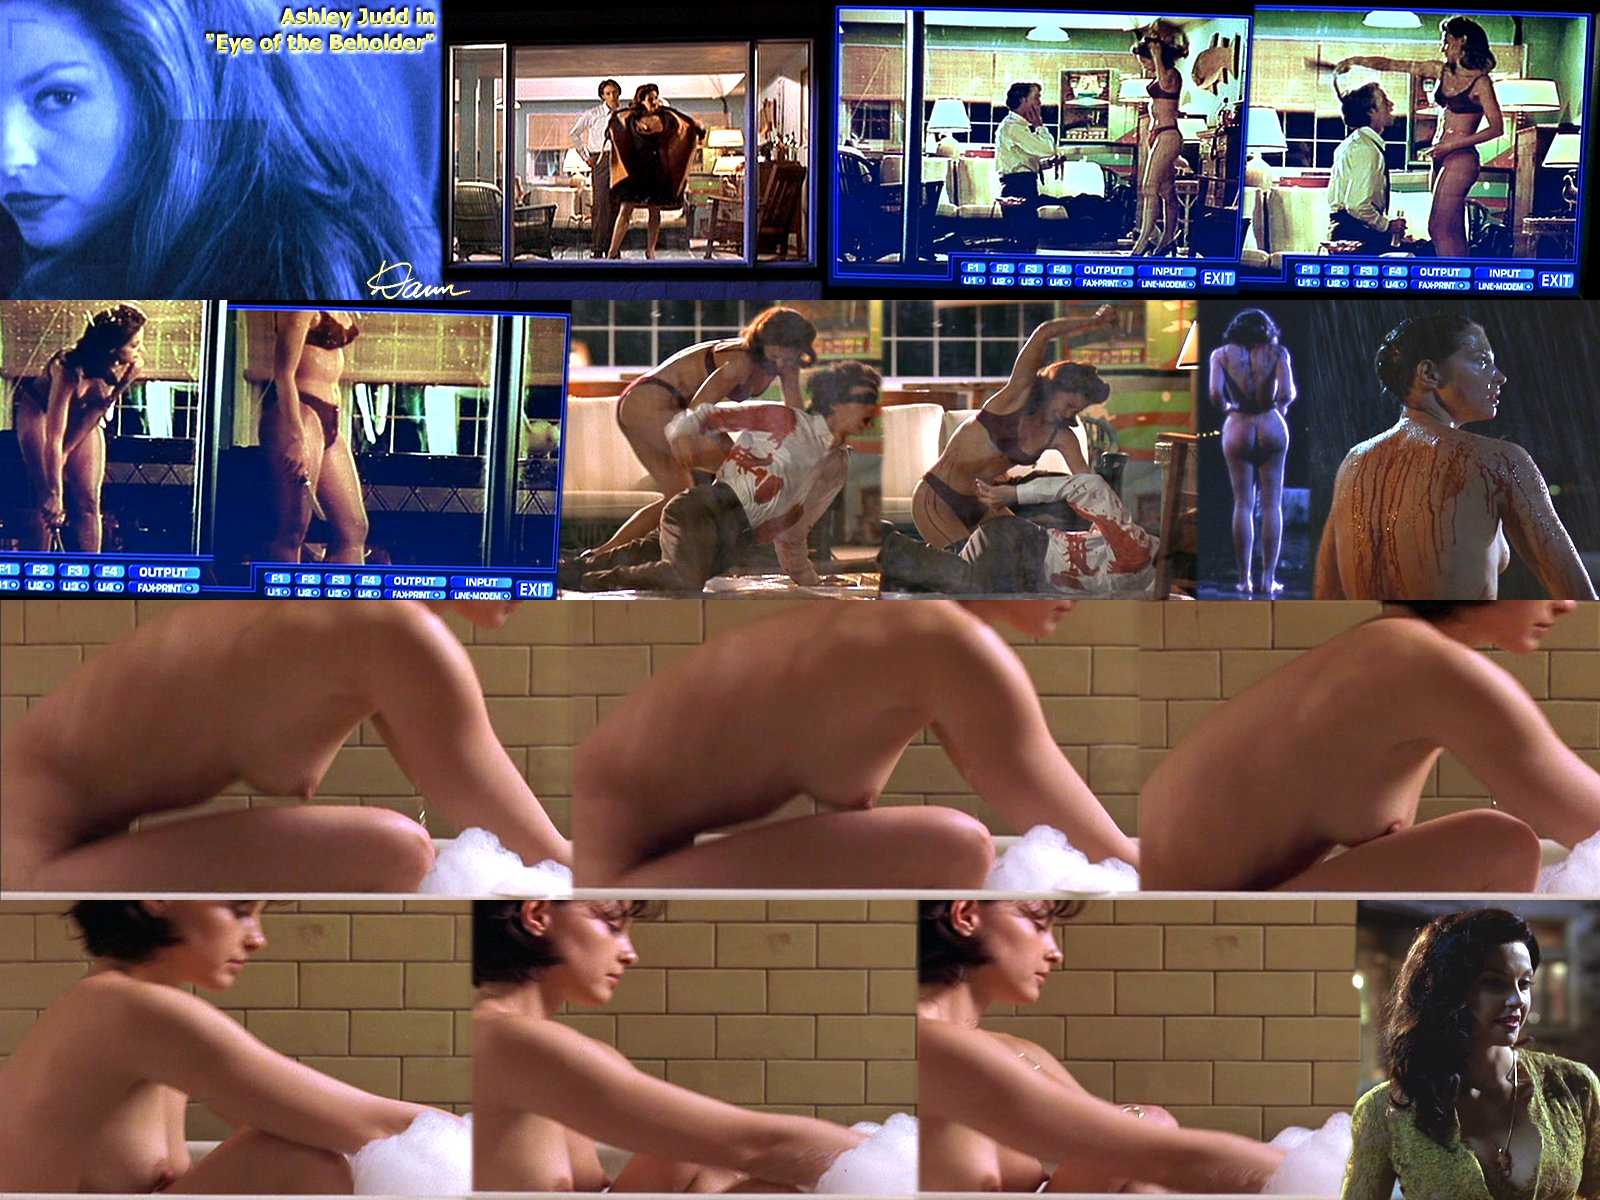 Ashley judd nude pictures - 🧡 Ashley Judd nude pics, pagina - 3 ANCENSORED...